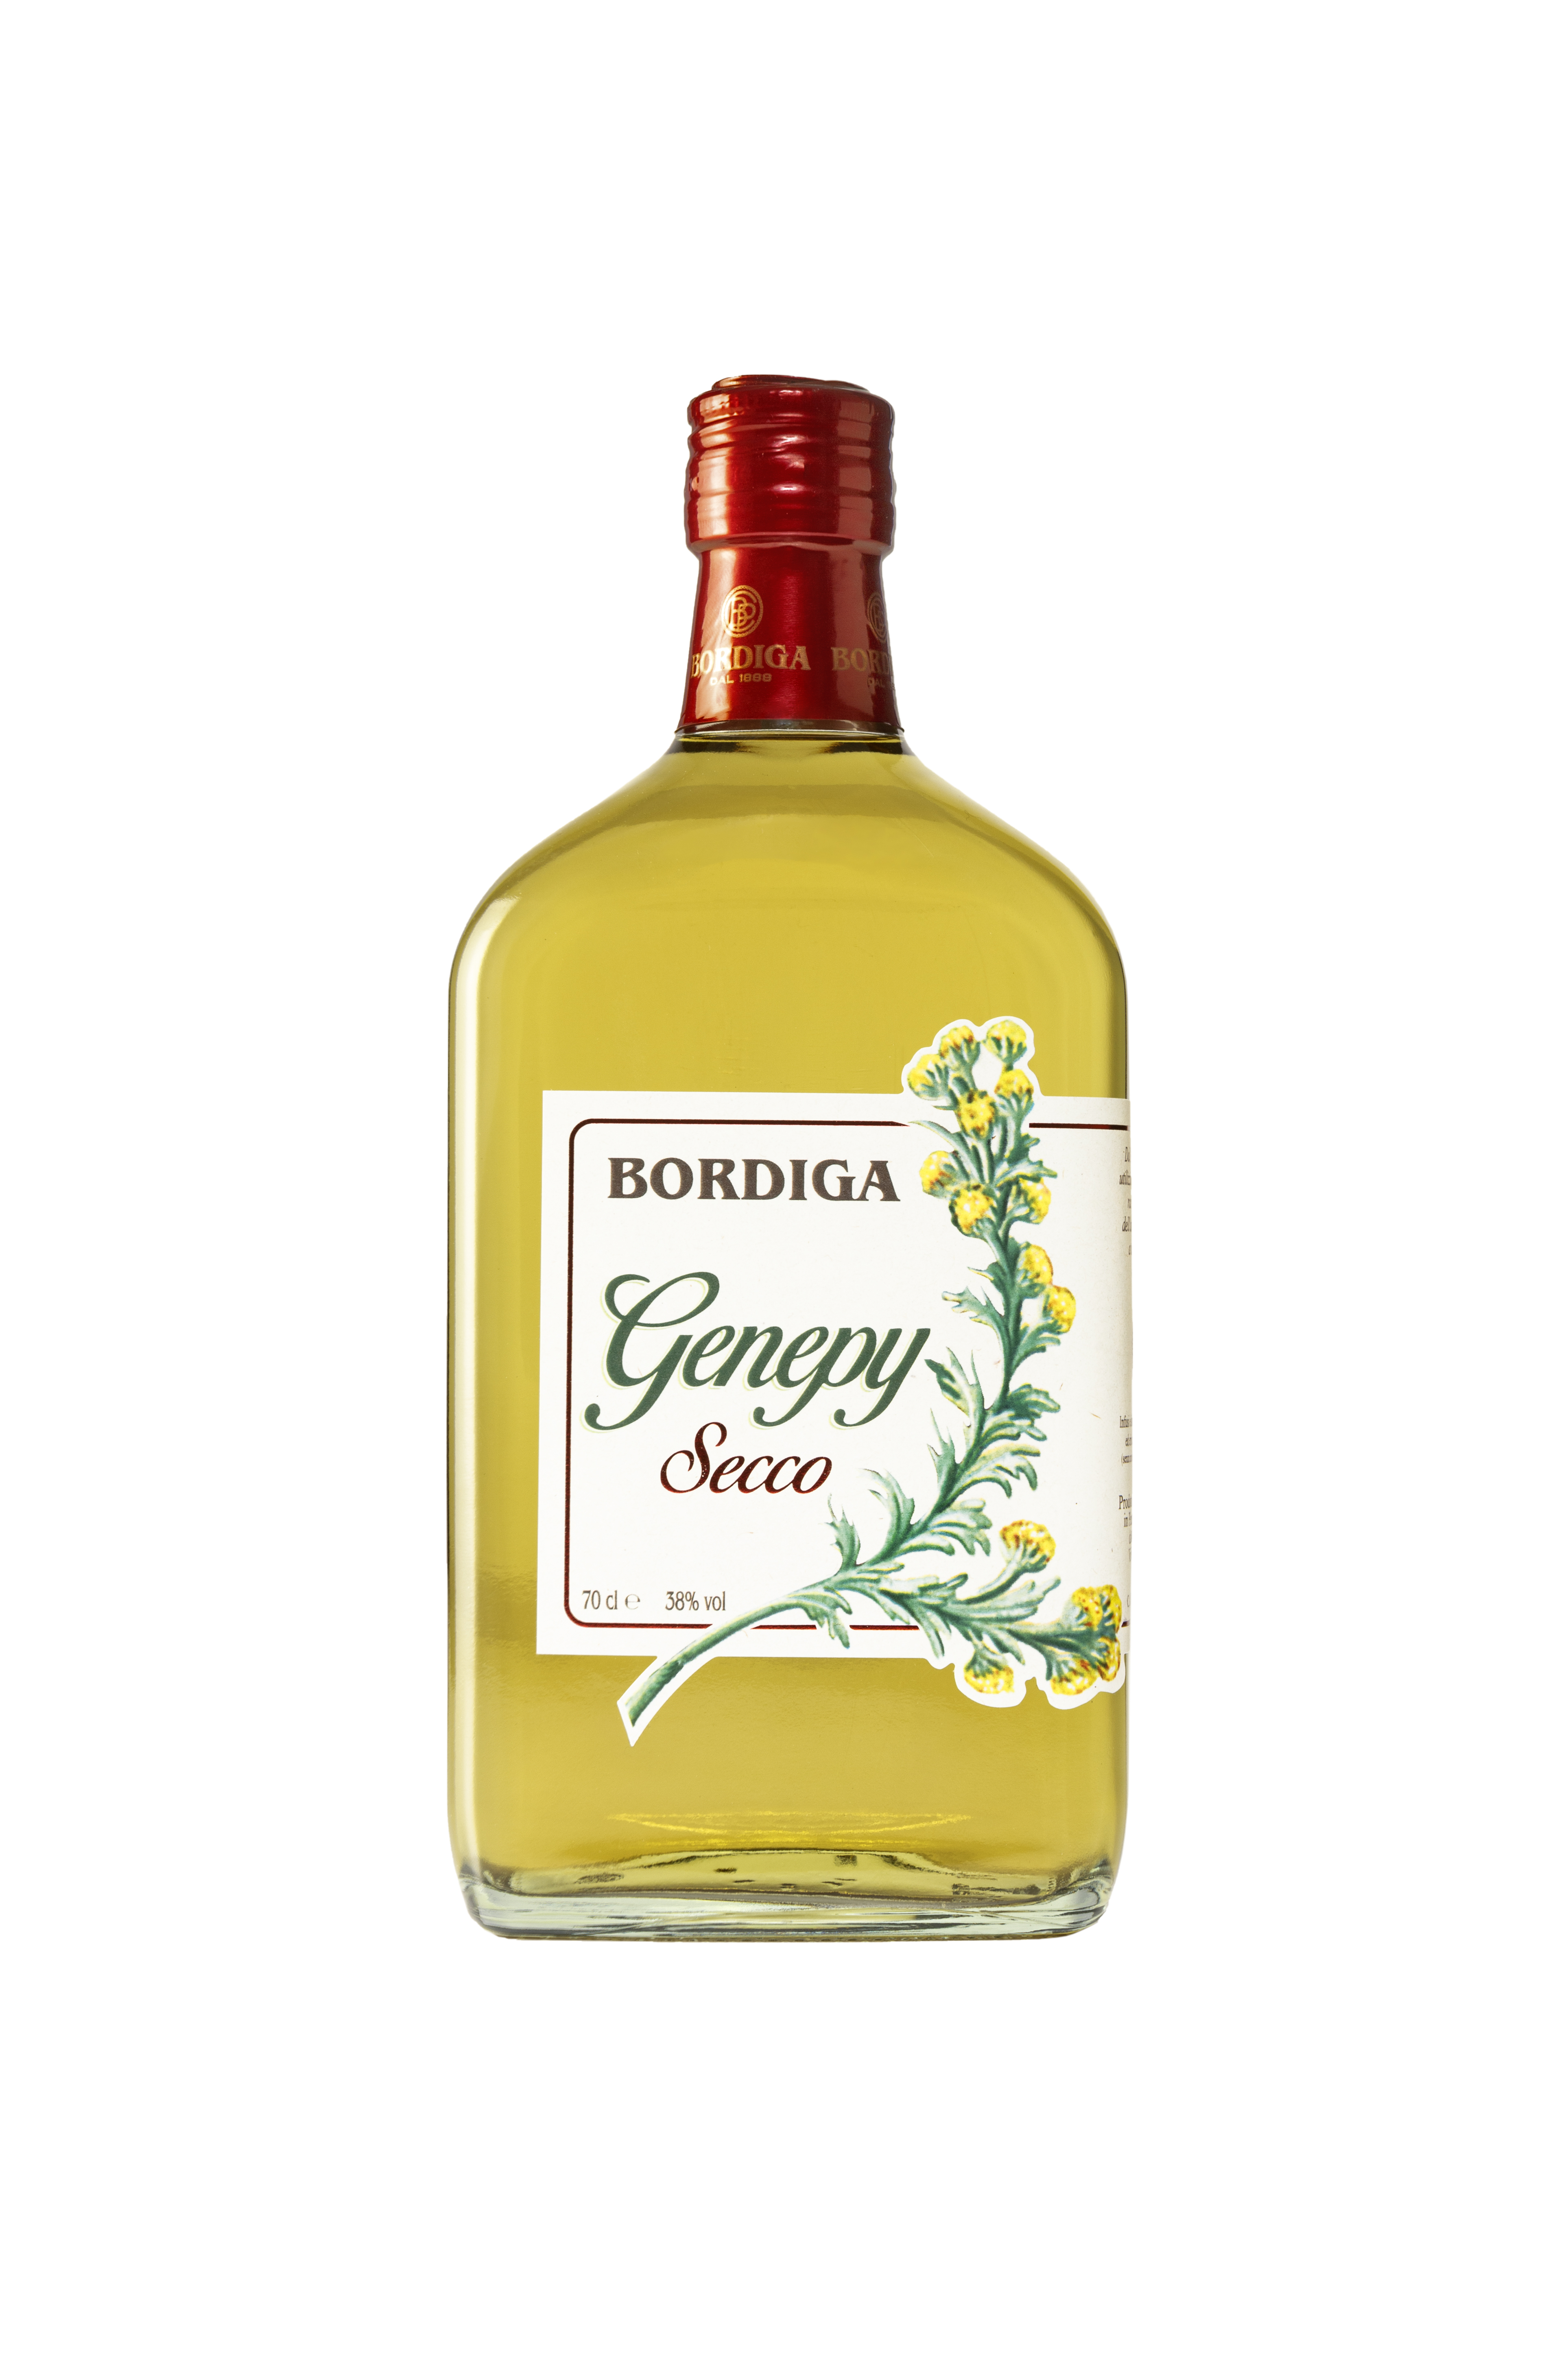 Genepy - Genepi Secco Bordiga / 38% Vol. 0,7 ltr. / Kräuterlikör aus Piemont